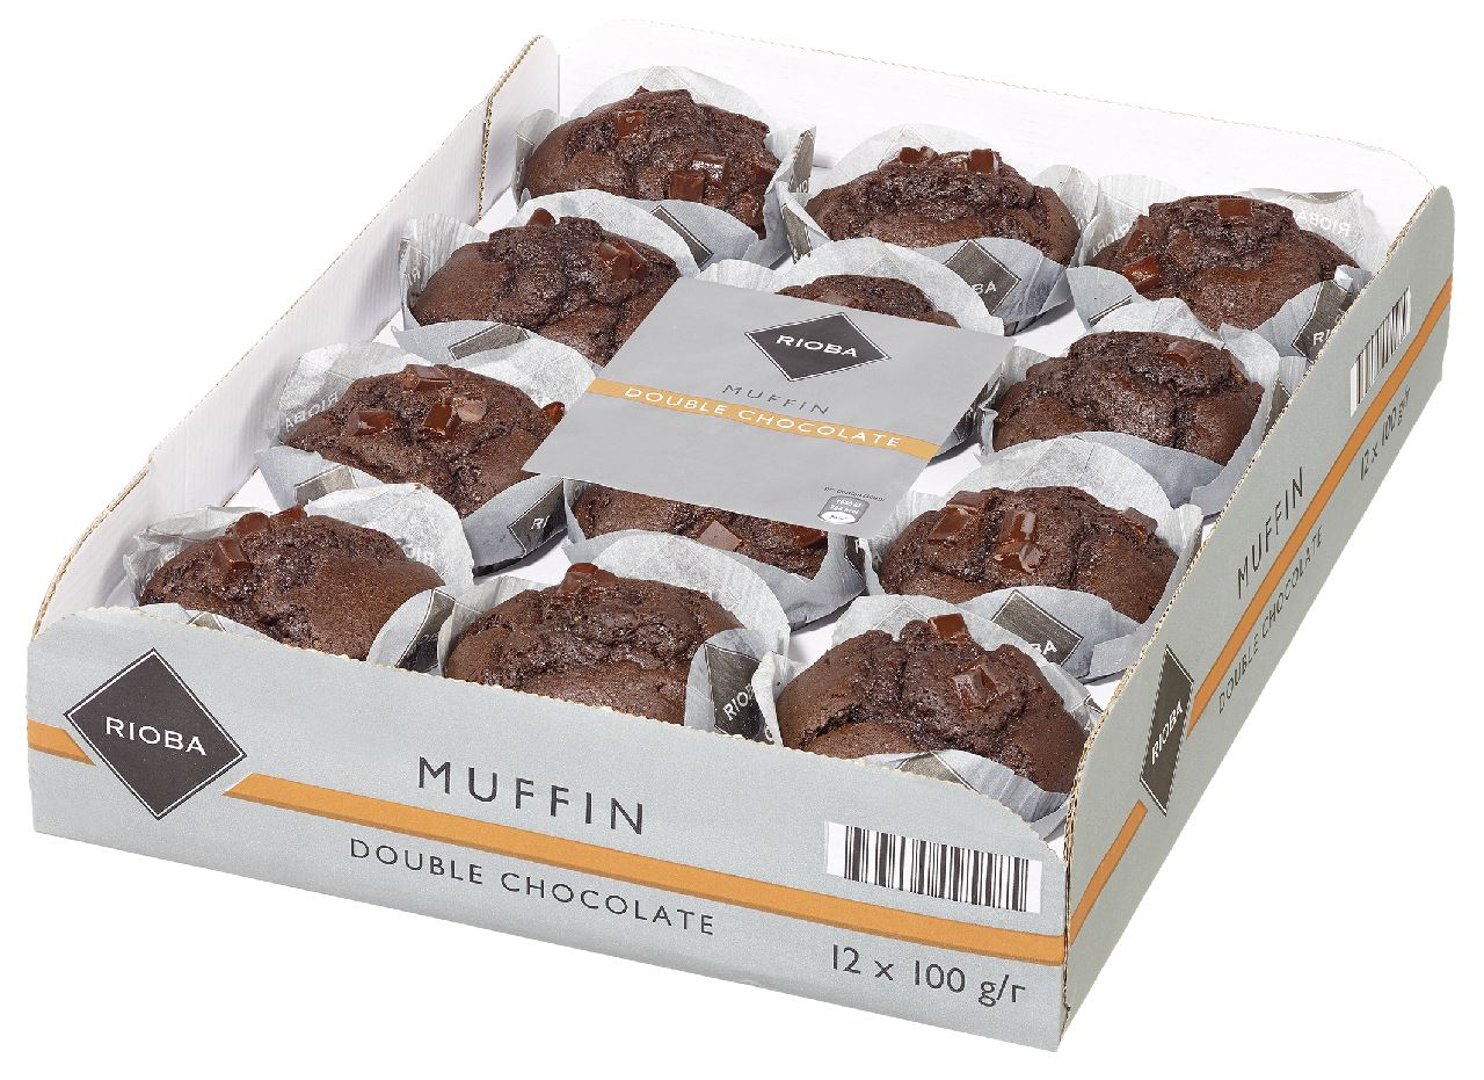 RIOBA - Double Chocolate Muffins - 12 Stück à 100 g Packung